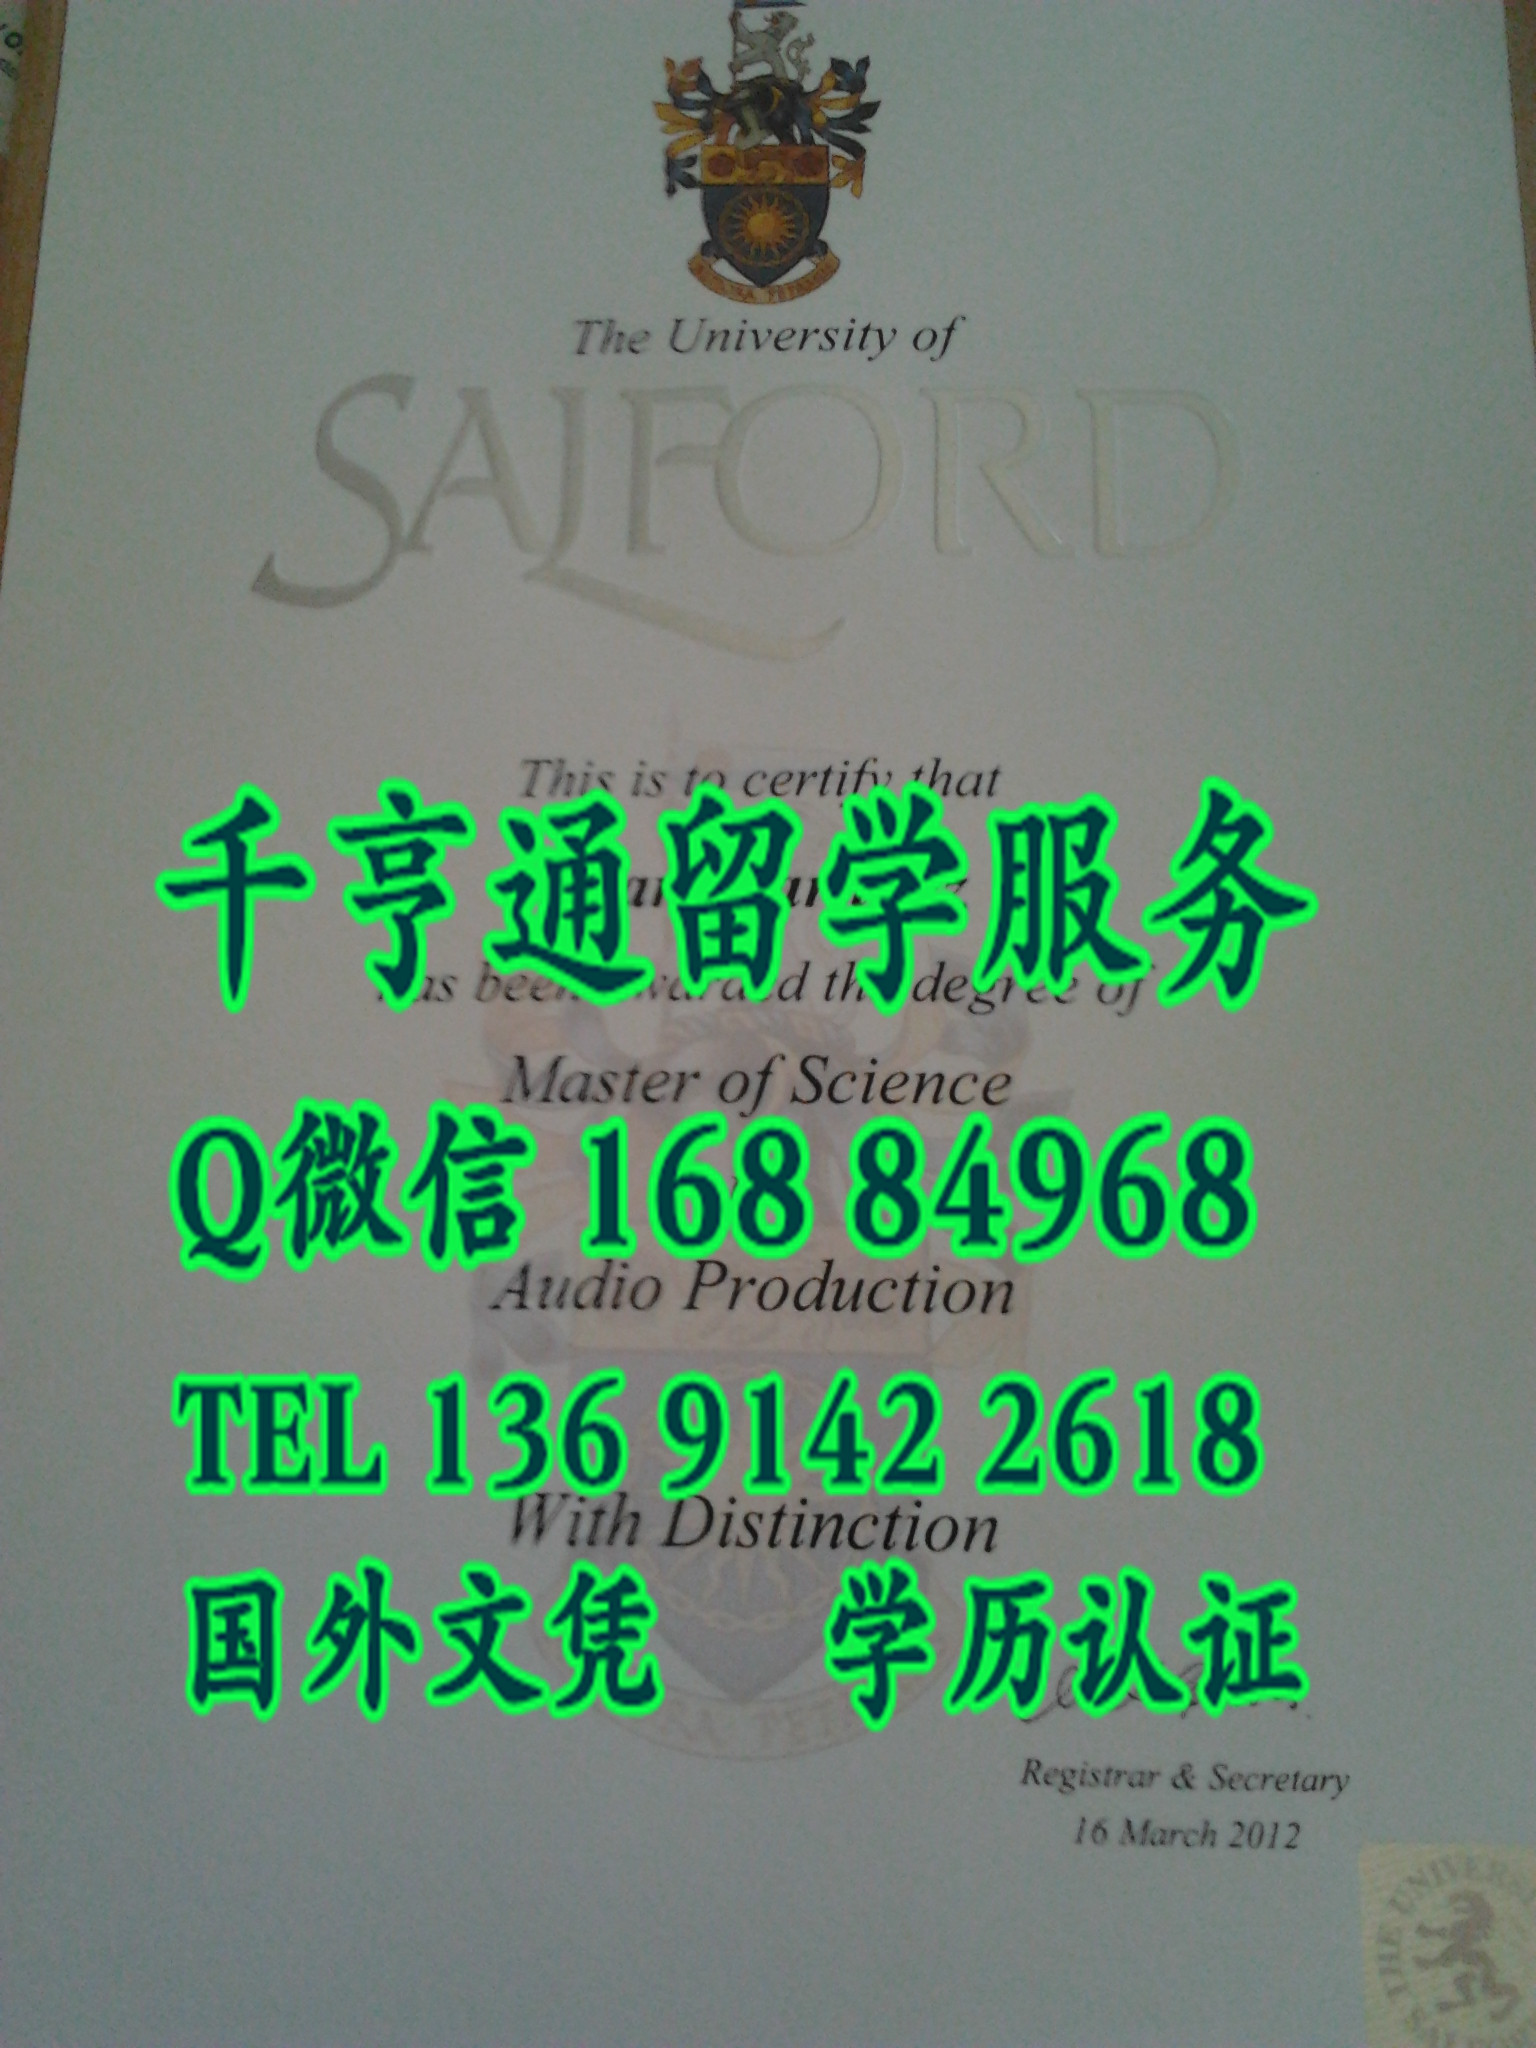 2012年英国索尔福德大学文凭样式 University of Salford Diploma